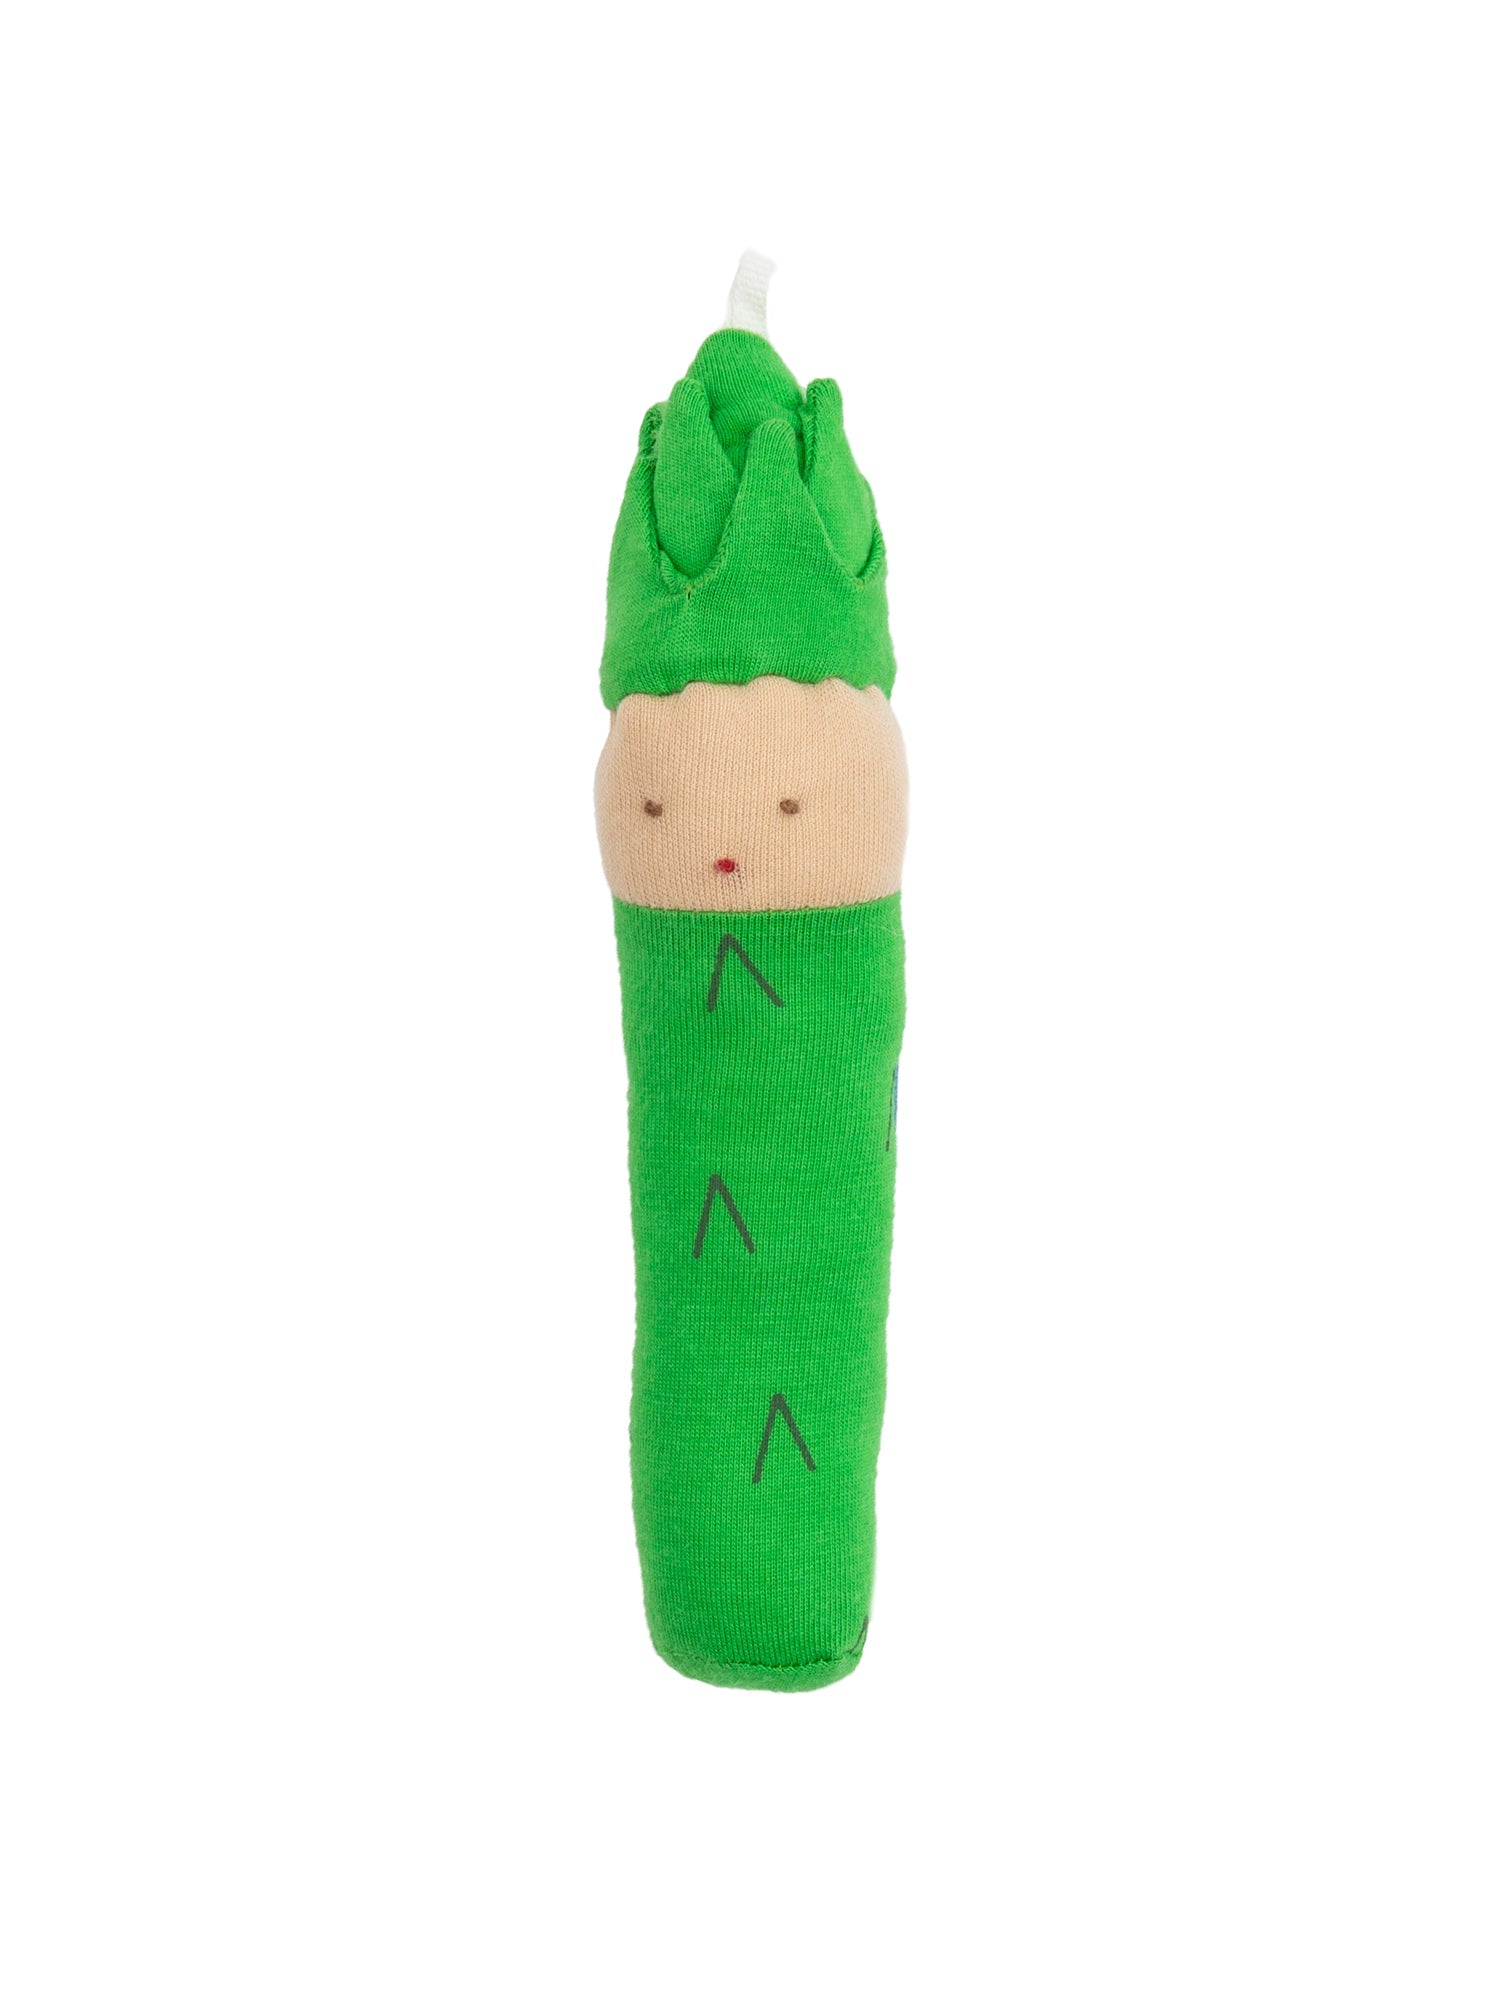 Asparagus Veggie Toy